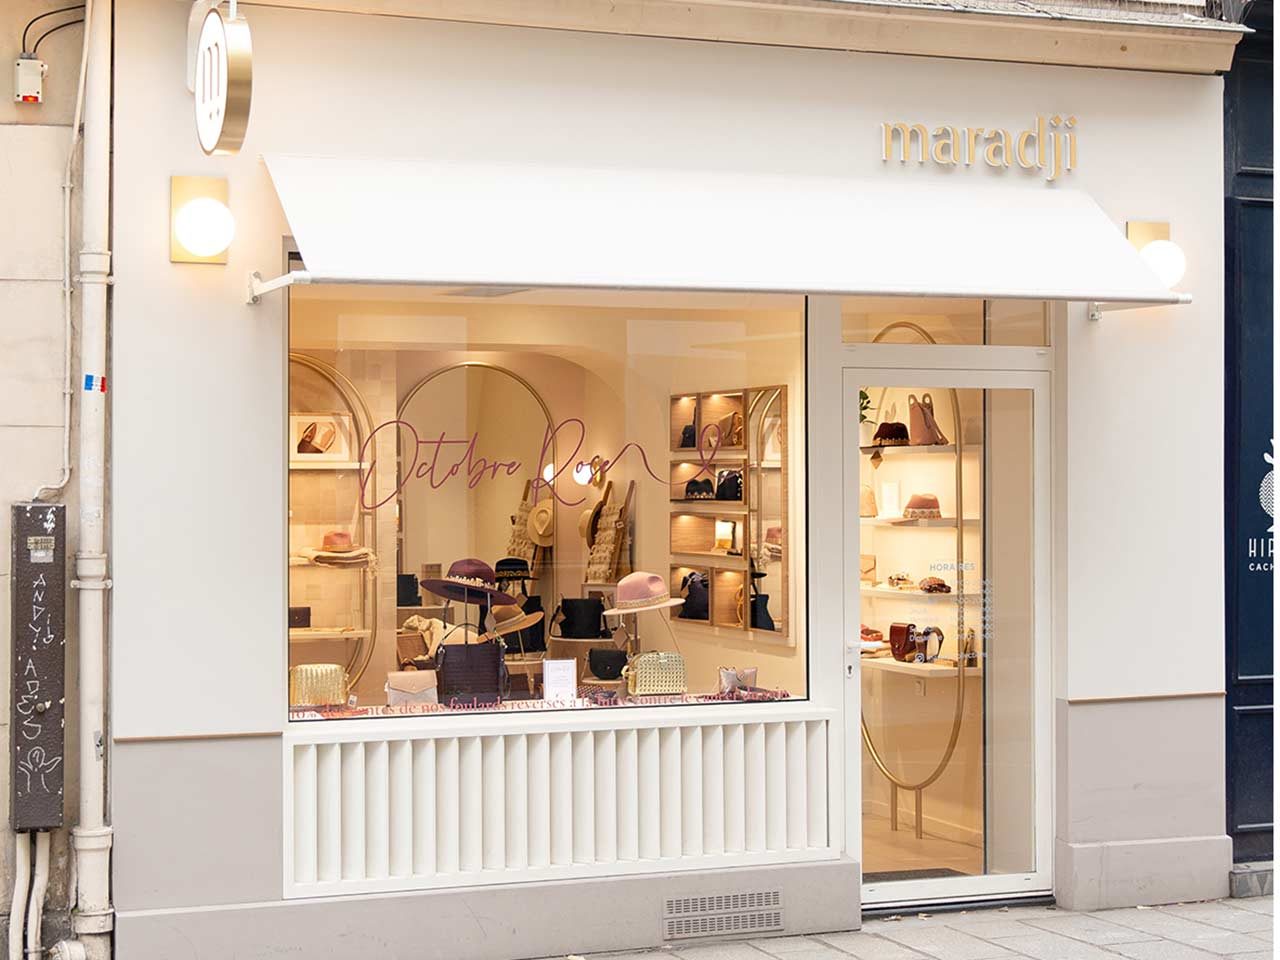 Maradji boutique Paris